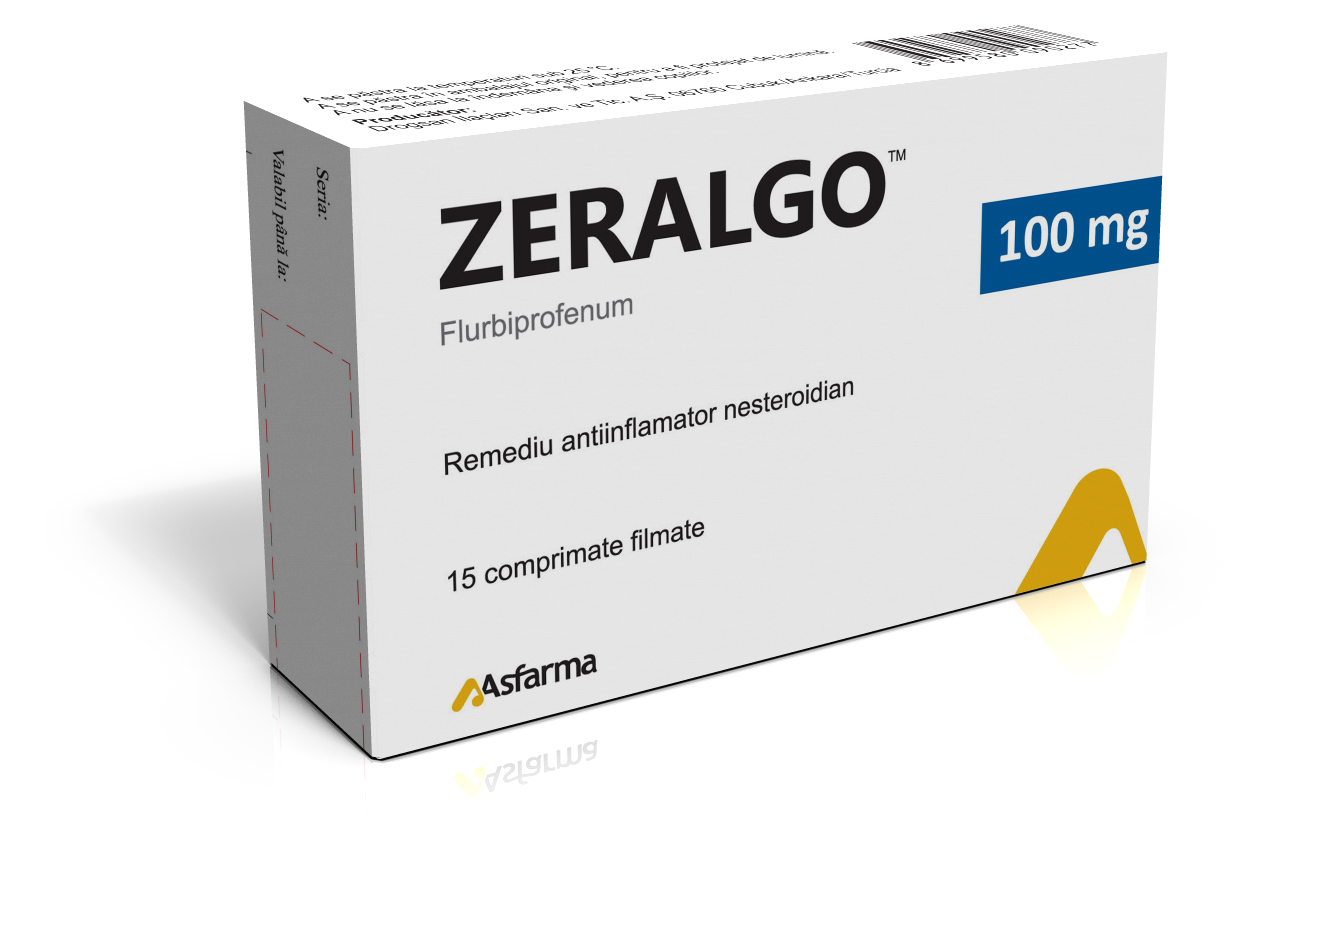 Zeralgo - image 0